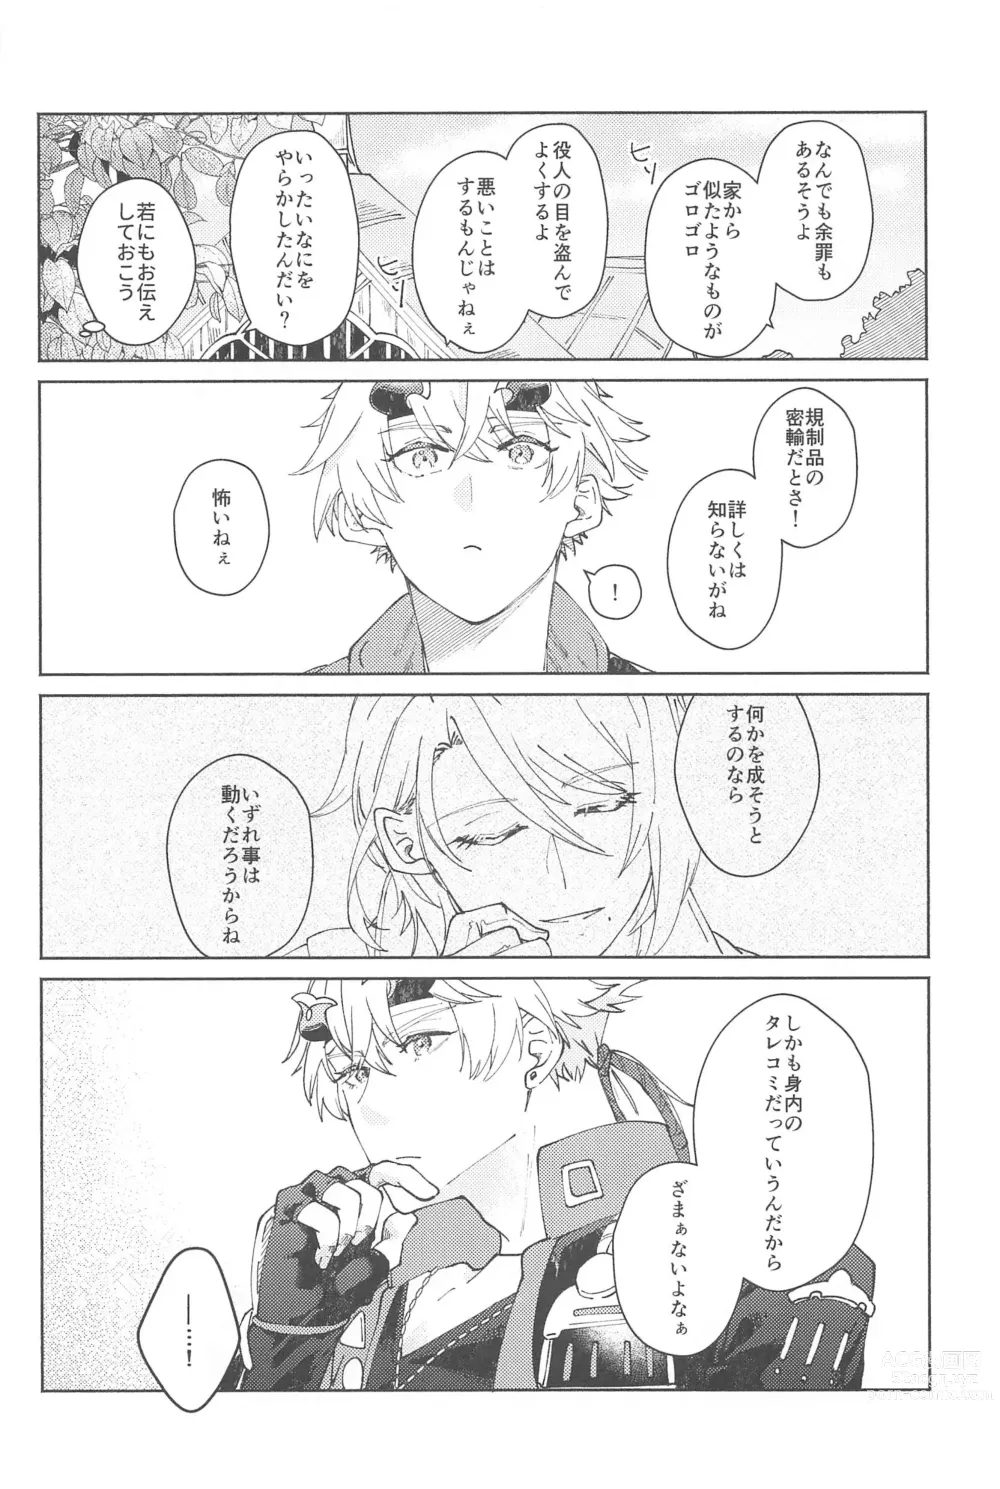 Page 19 of doujinshi Zenbu Kimi no Mono